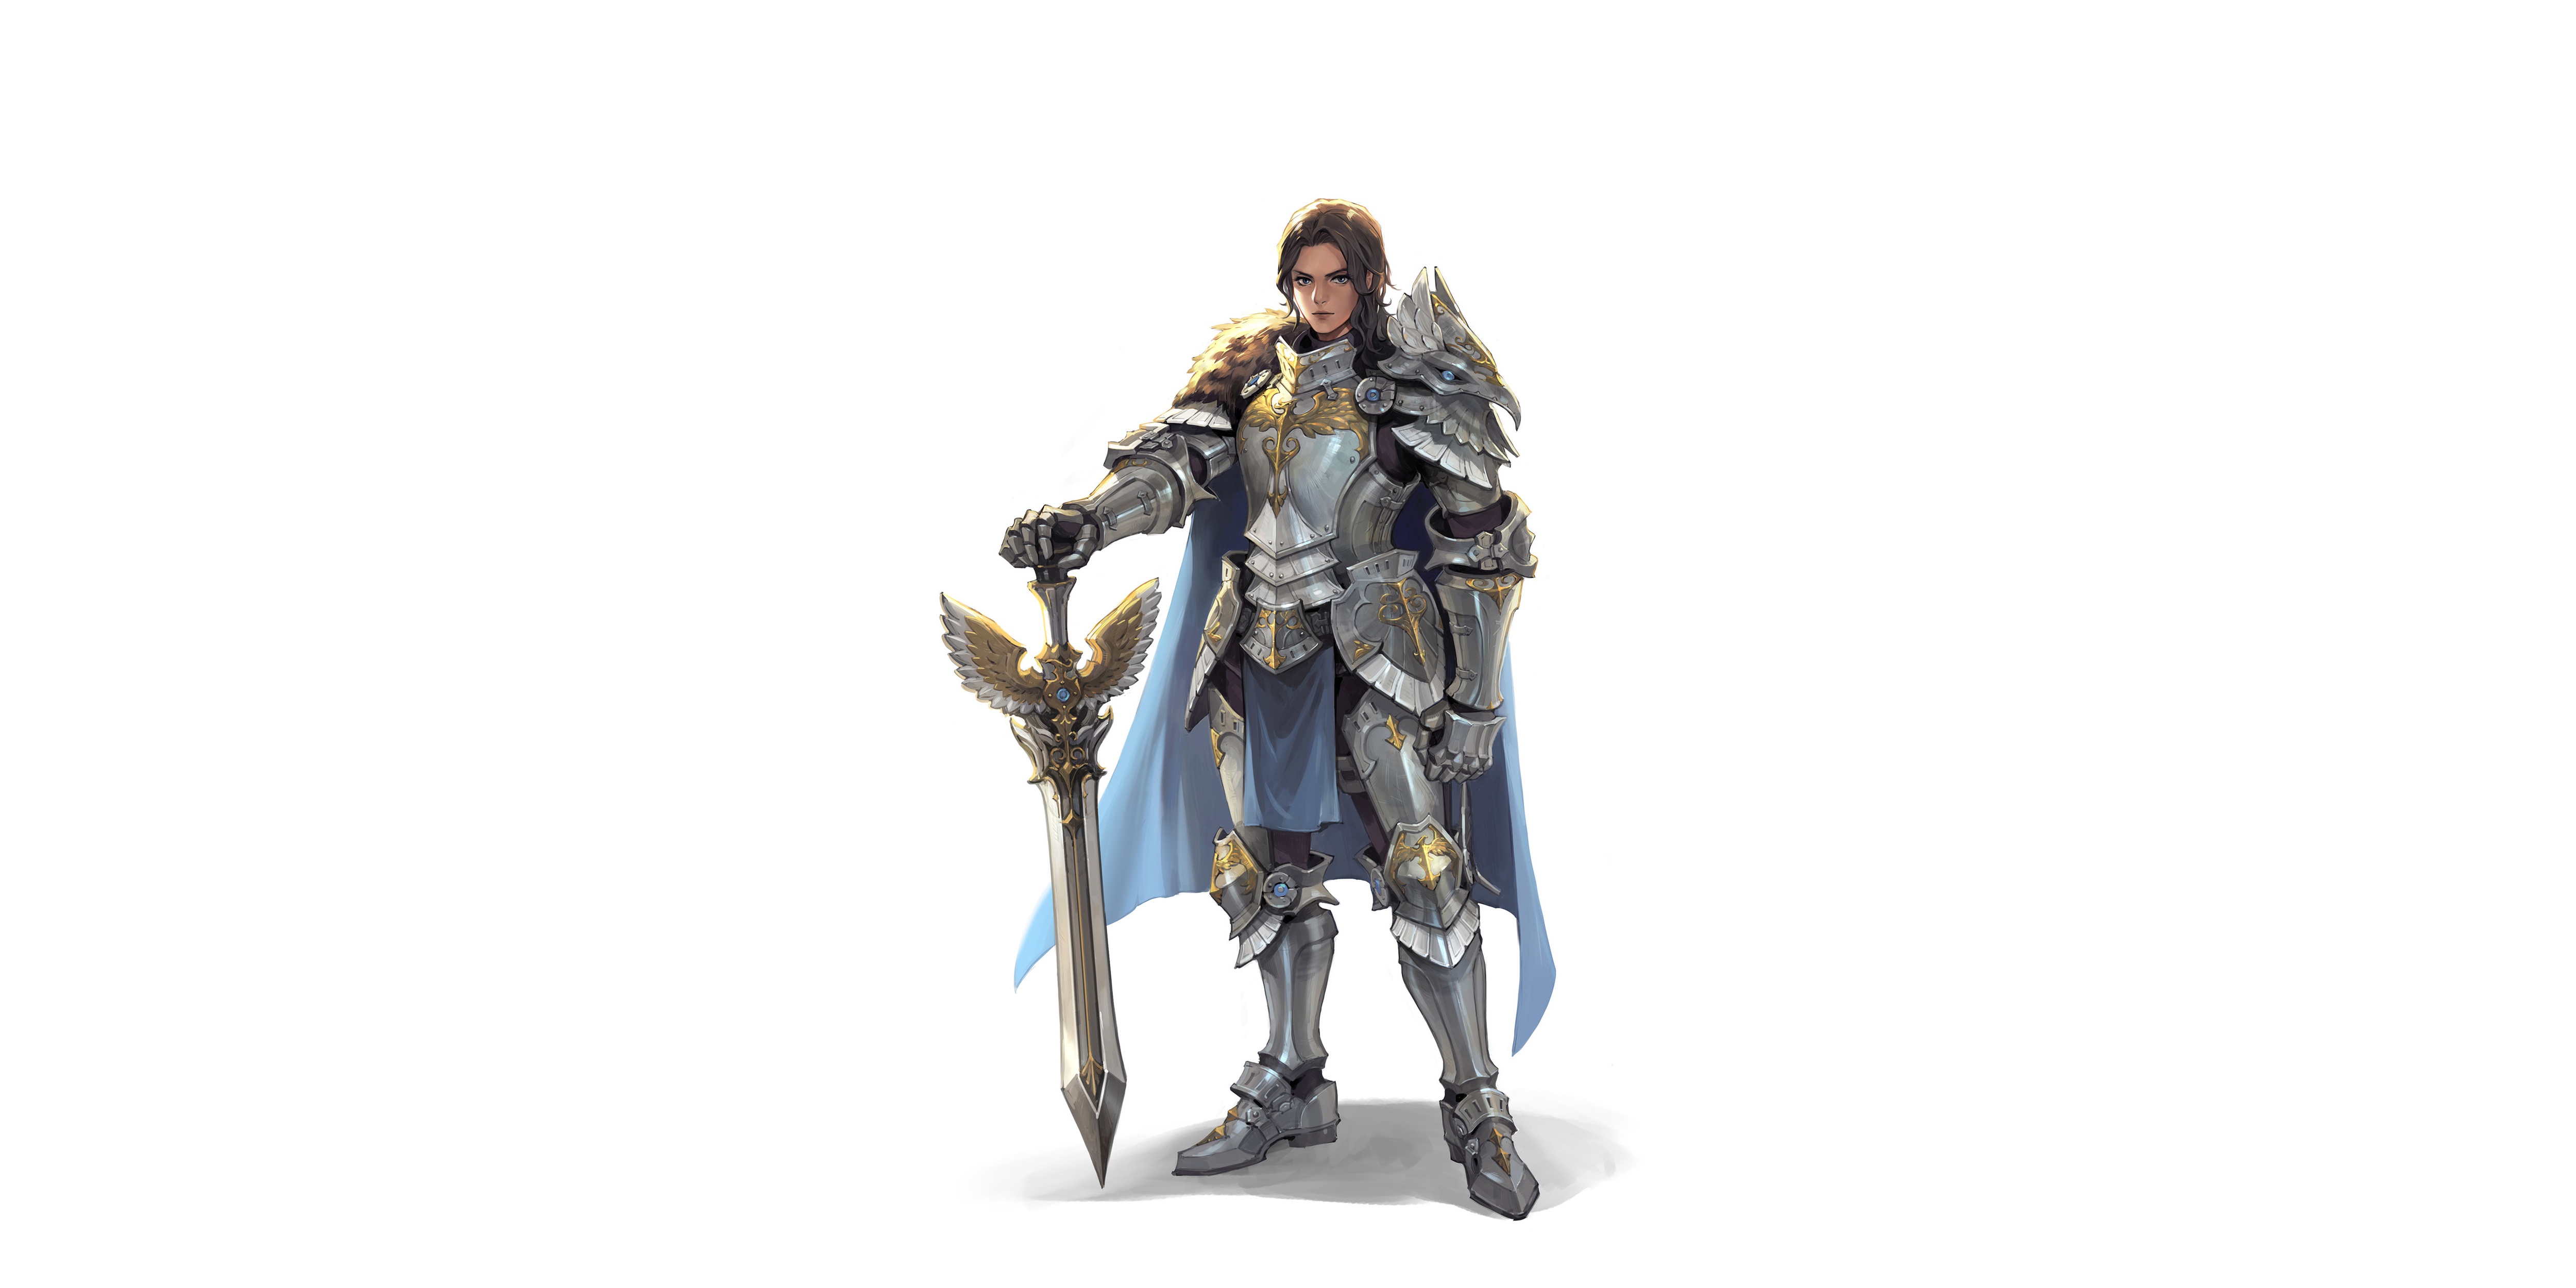 Armor Girl Knight Sword Woman Warrior 5000x2500